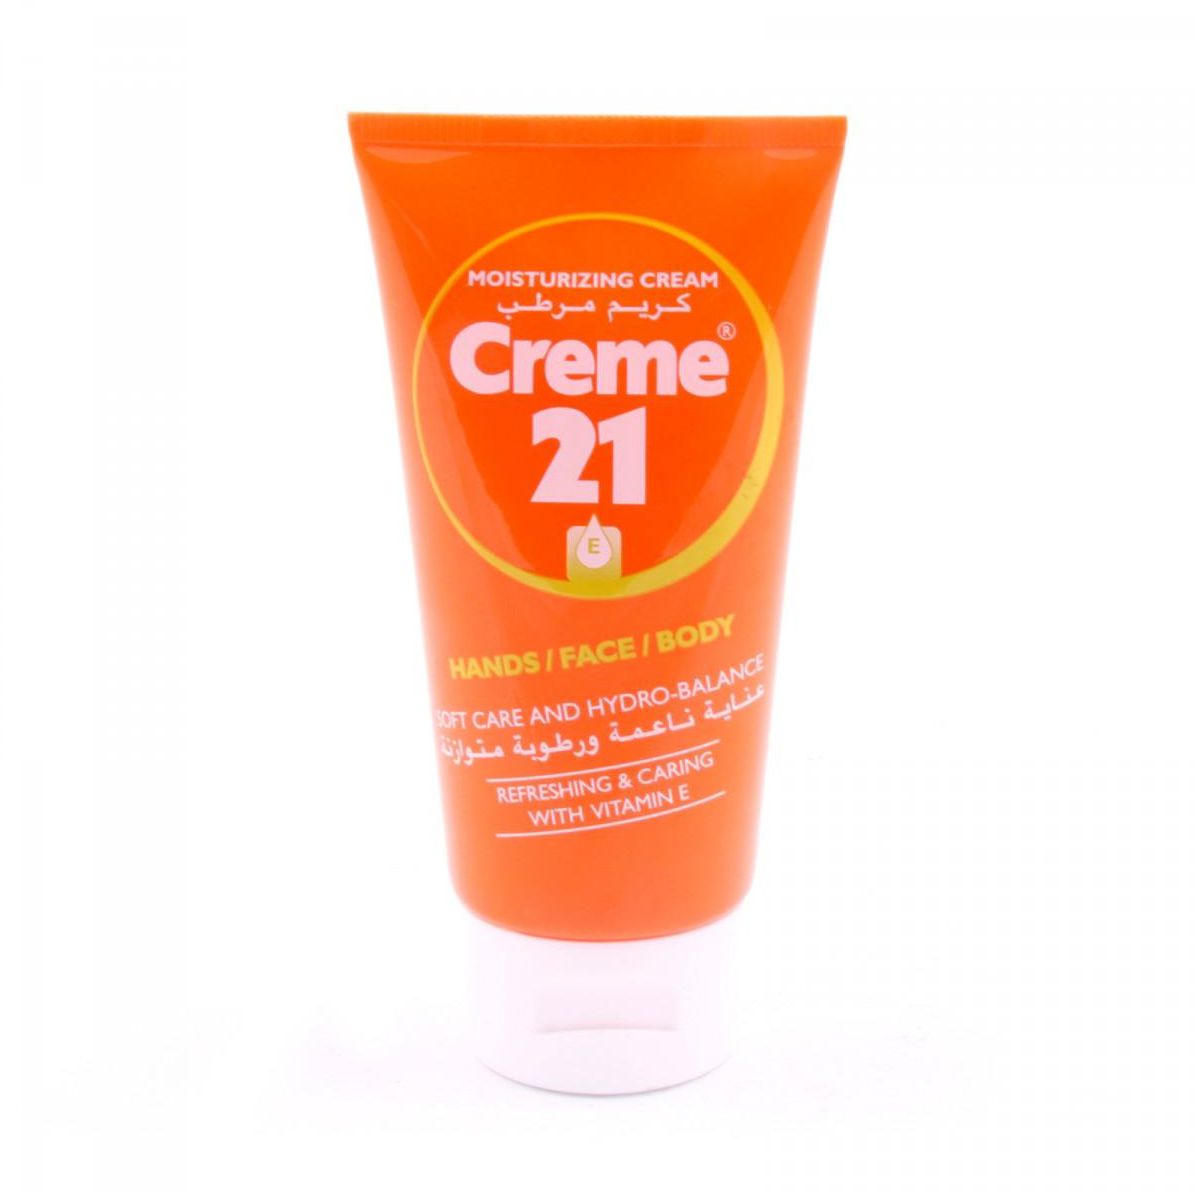 Creme 21 Moisturizing Cream 75ml